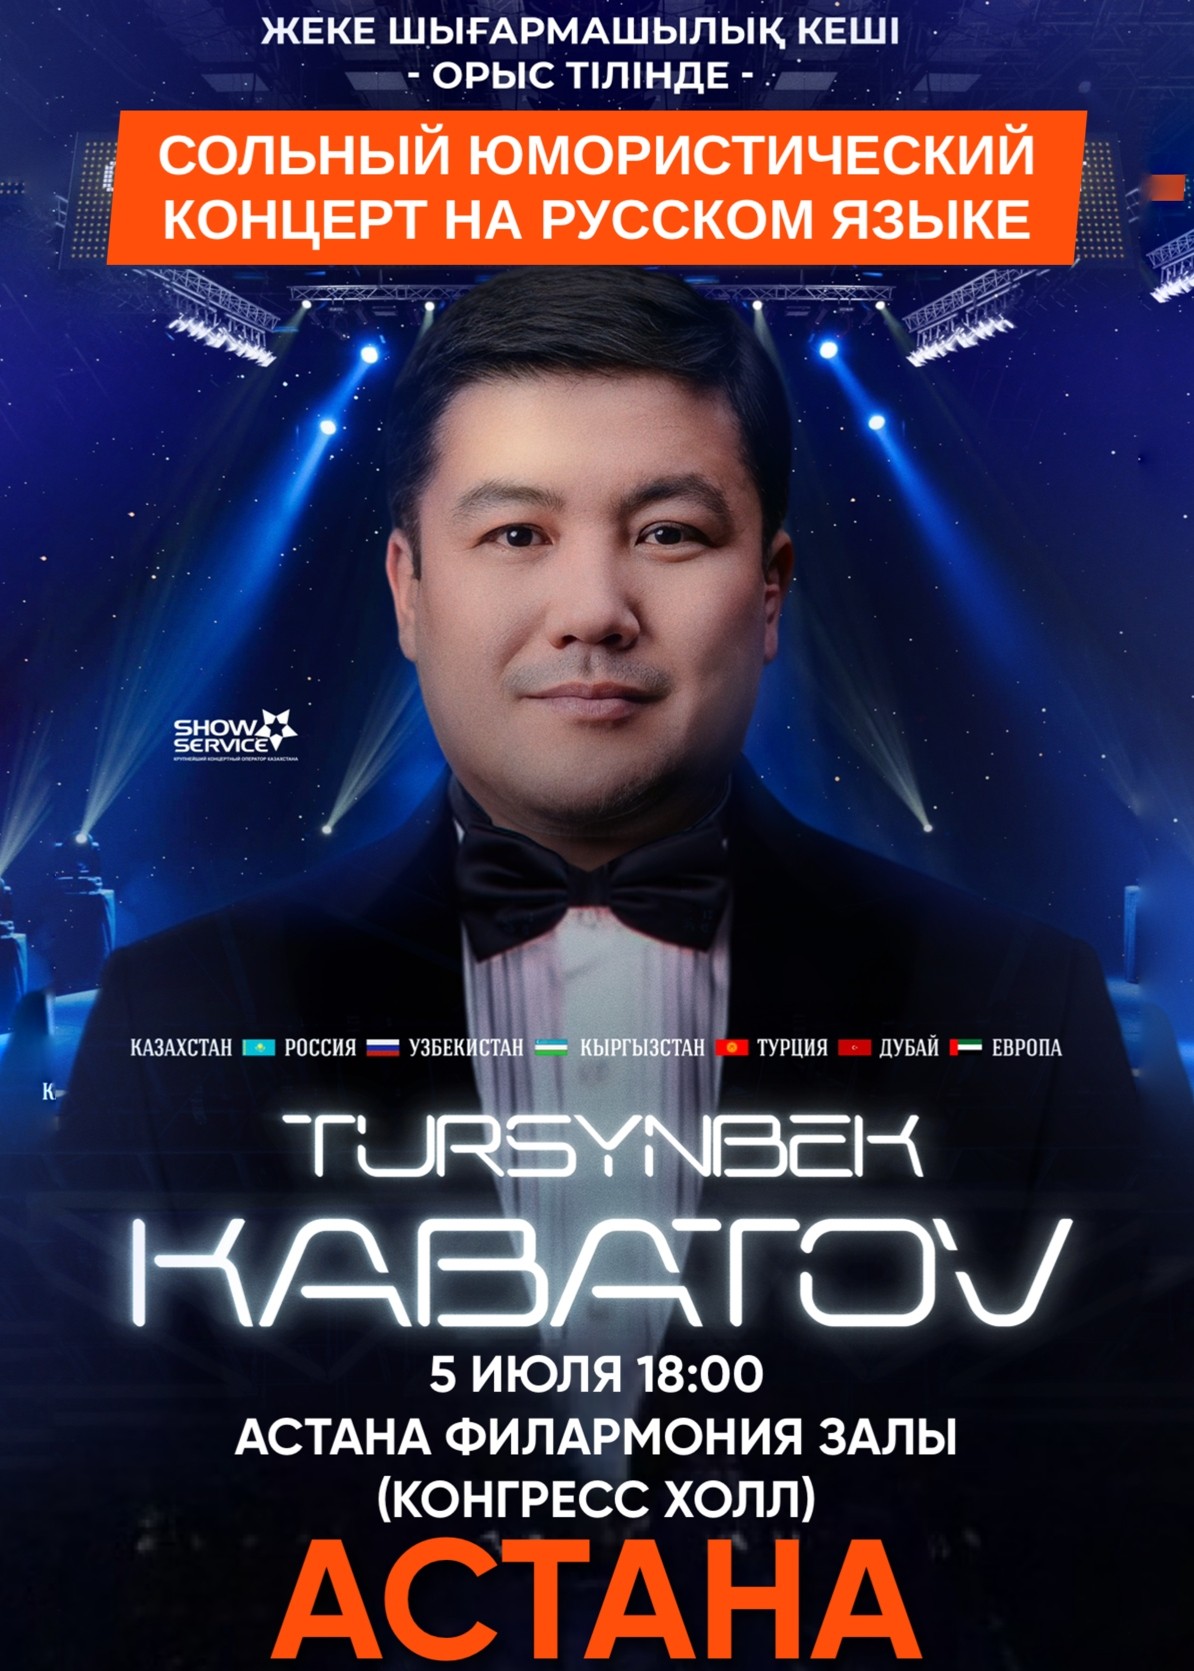 Tursynbek Kabatov's concert in Astana